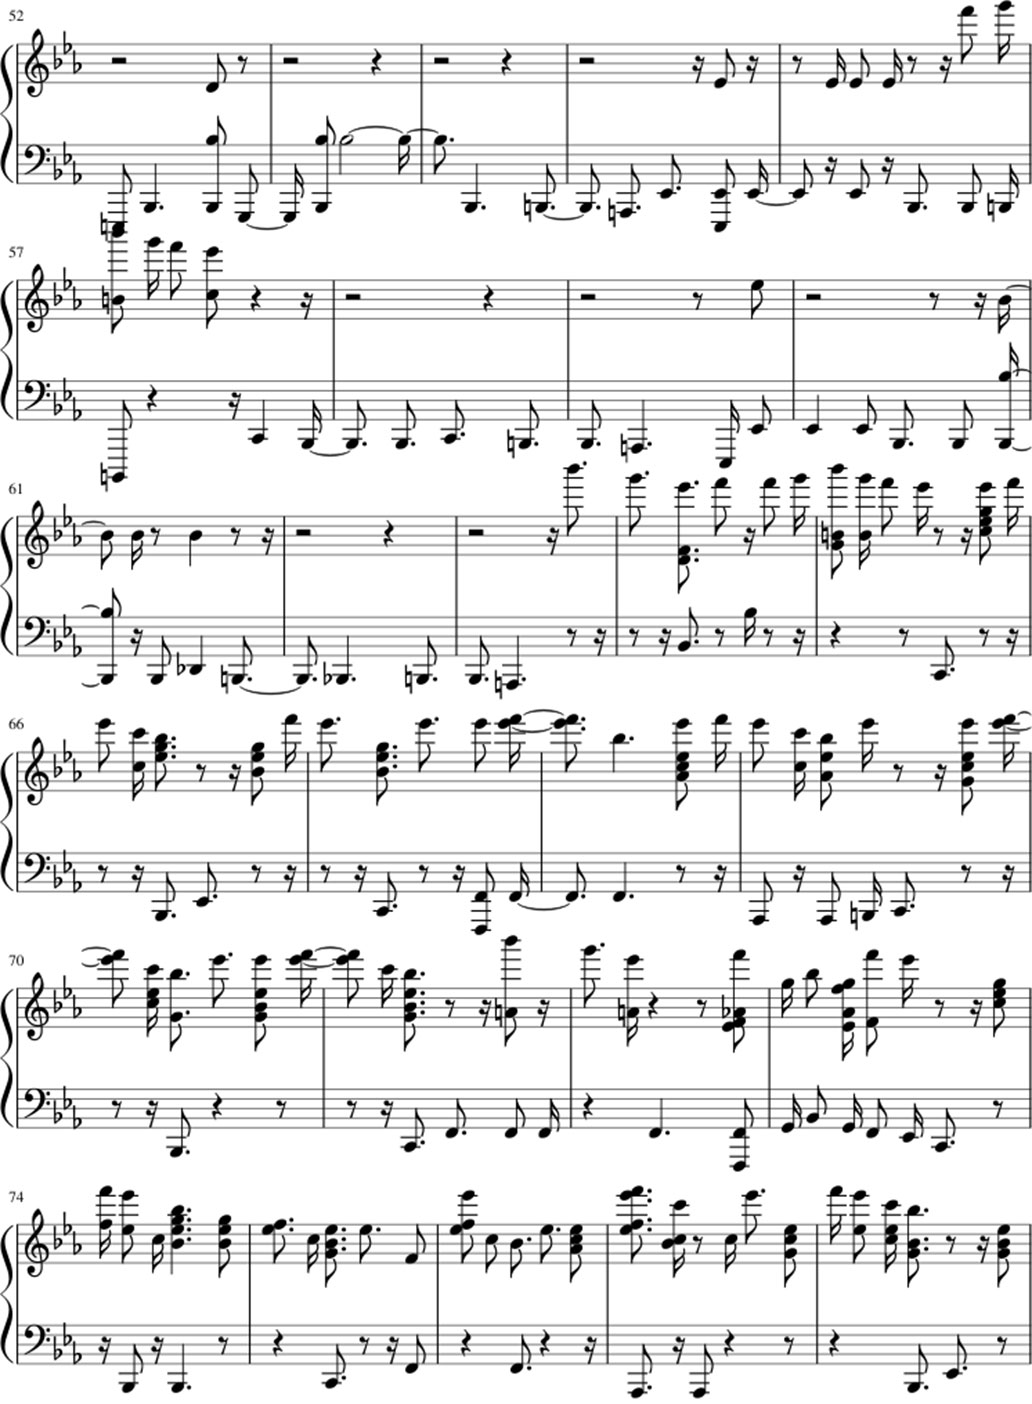 Windfall sheet music notes 3